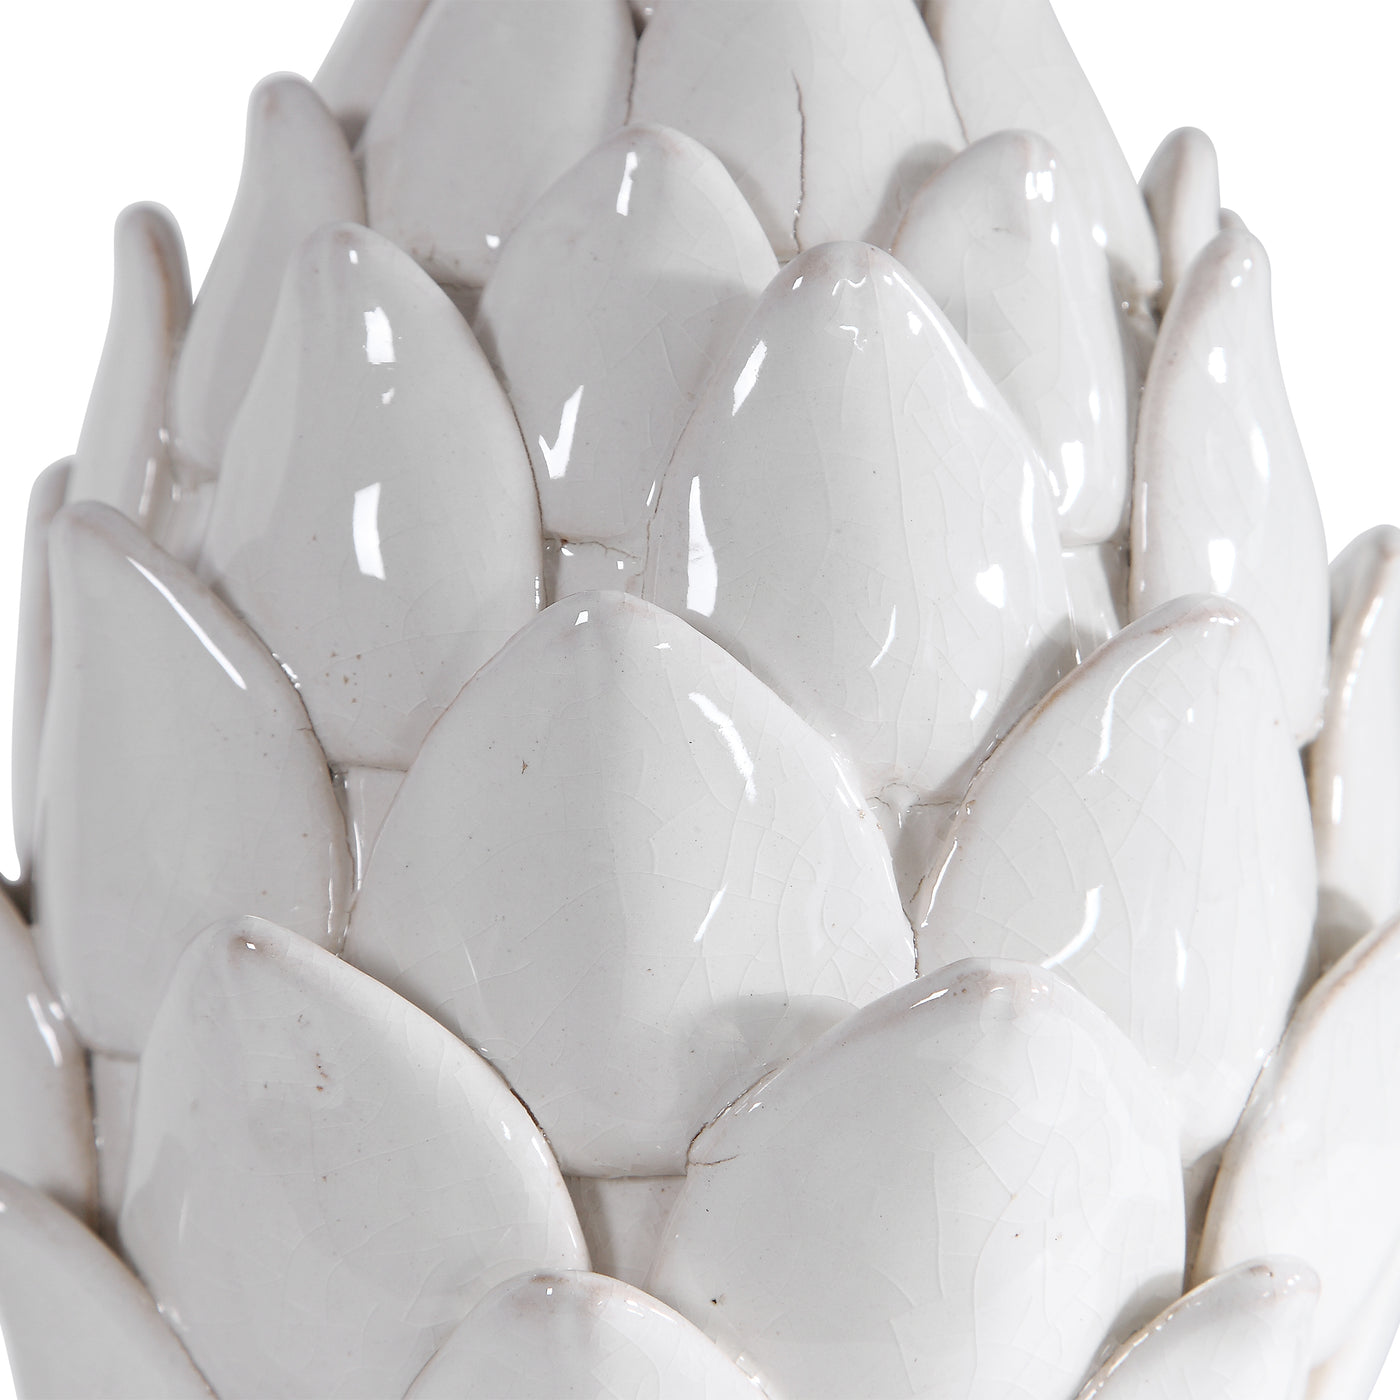 Uttermost White Artichoke Table Lamp